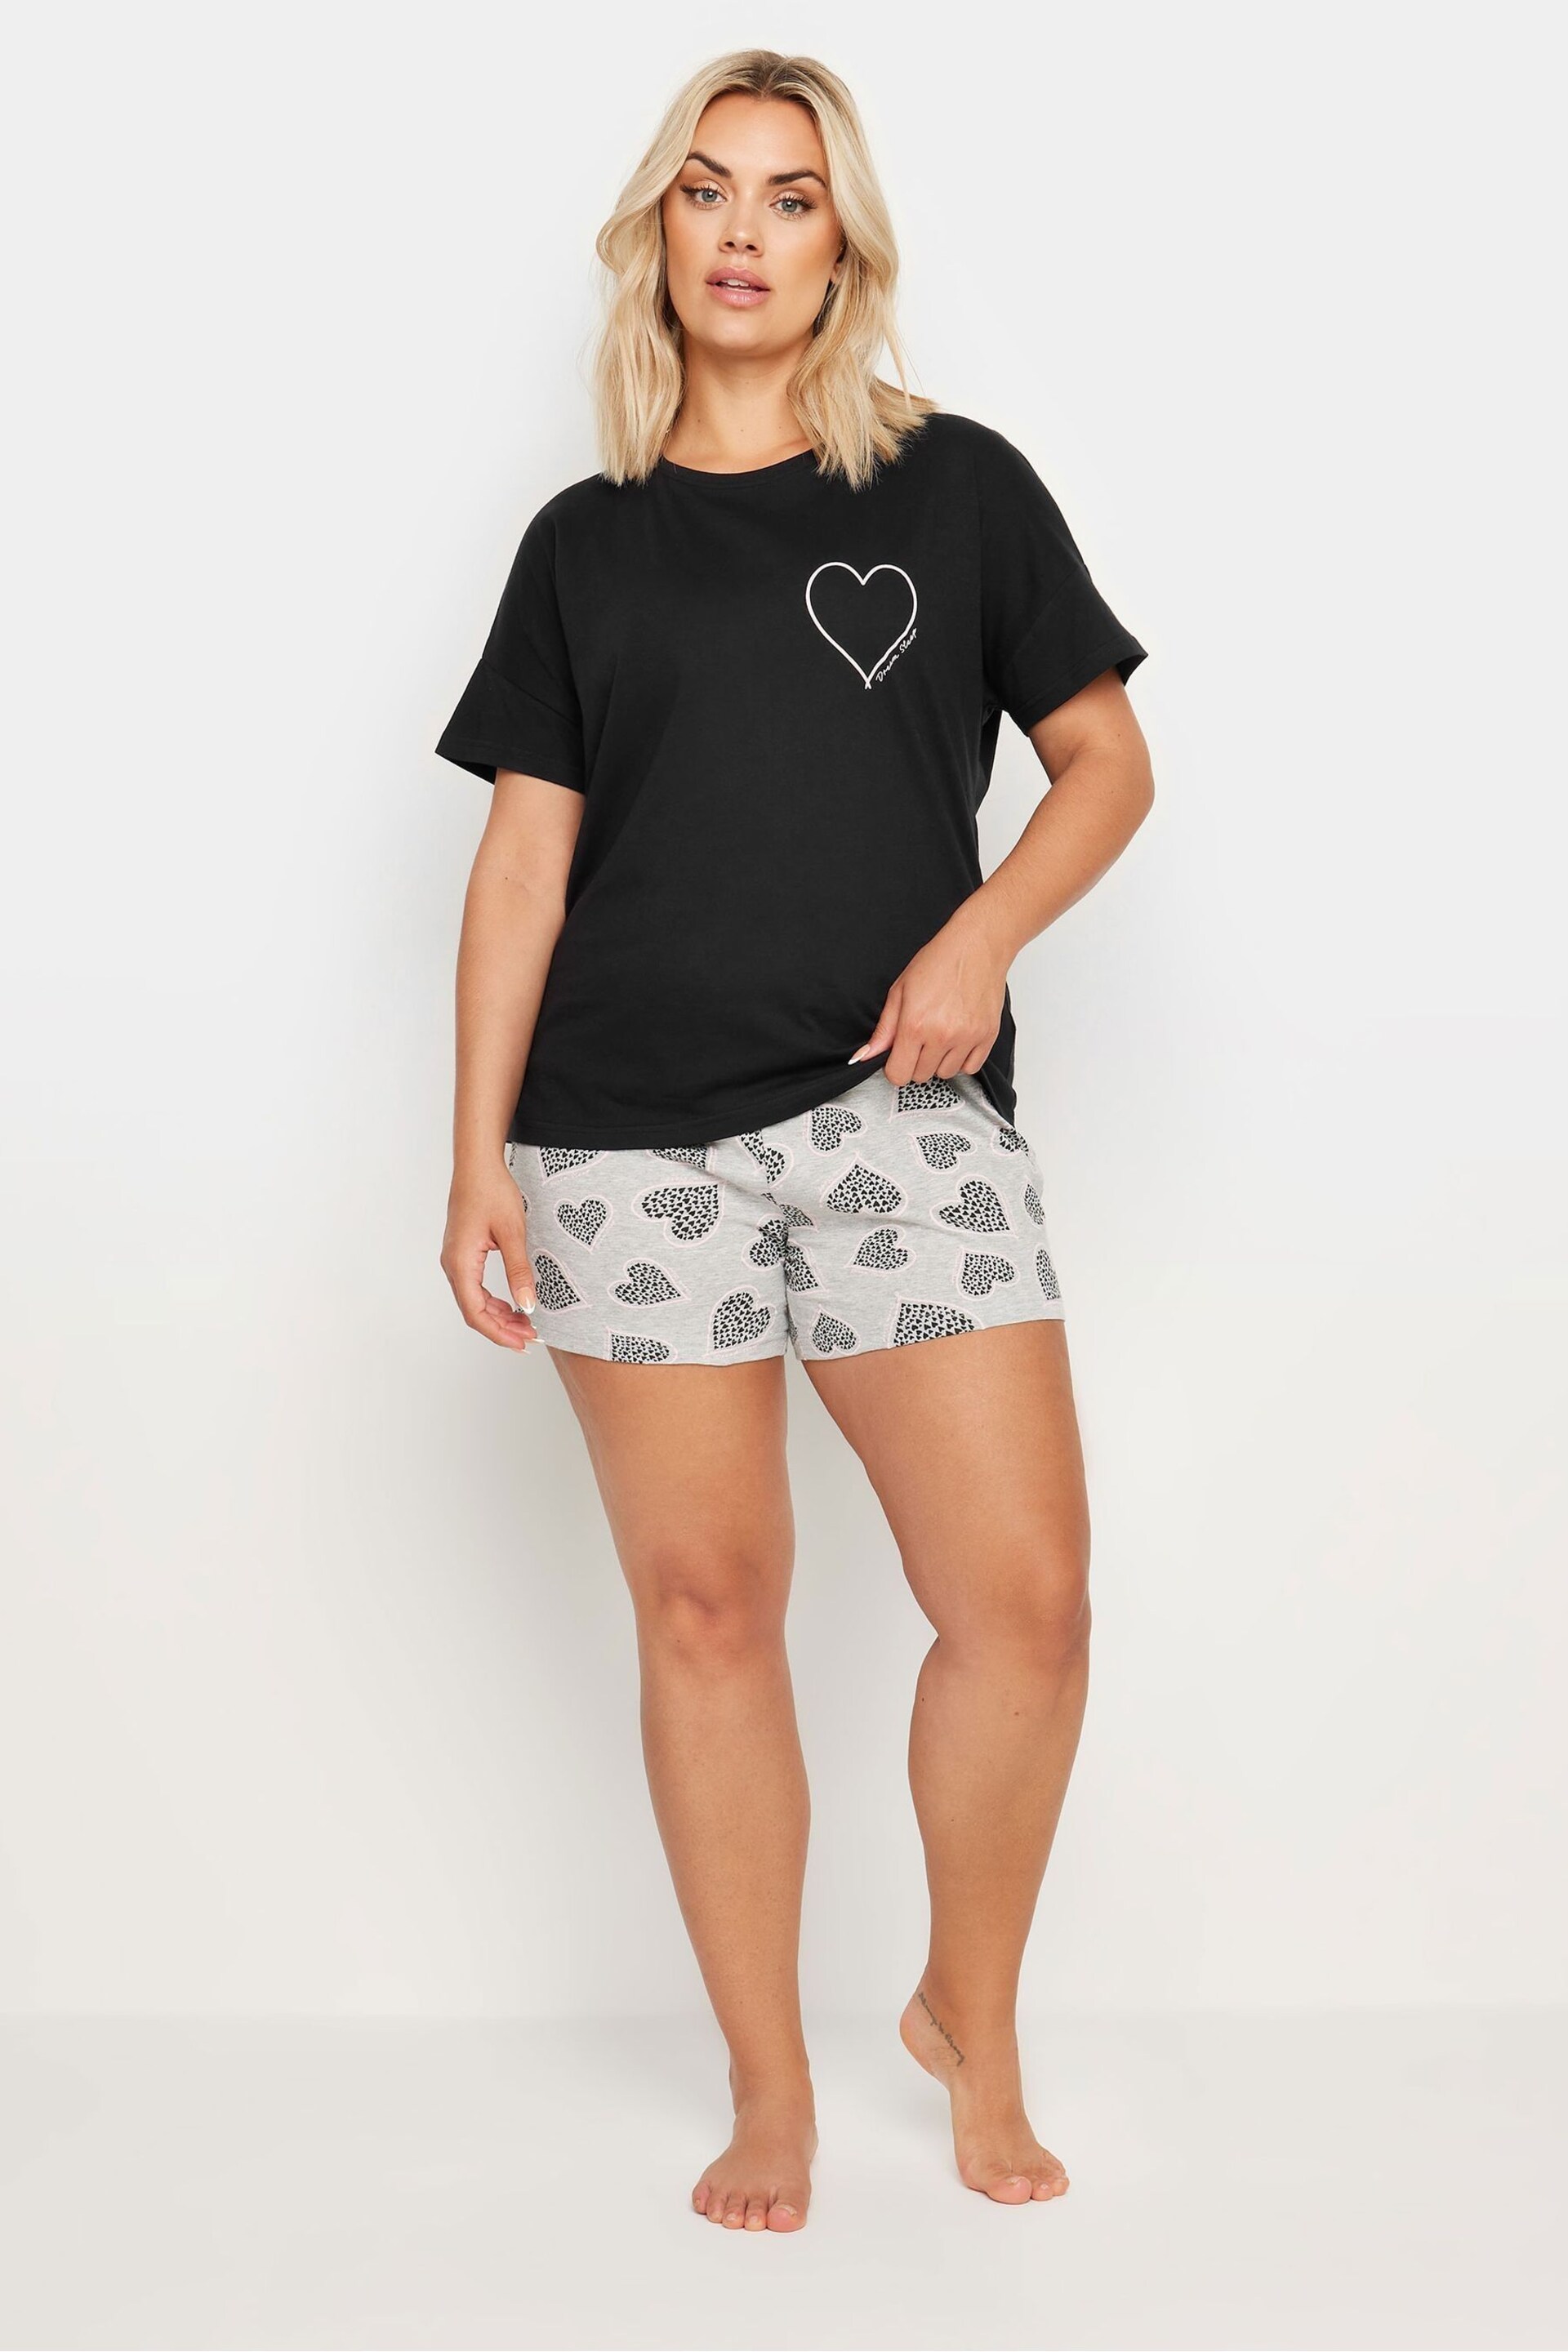 Yours Curve Black Heart Print Pyjama Set - Image 2 of 5